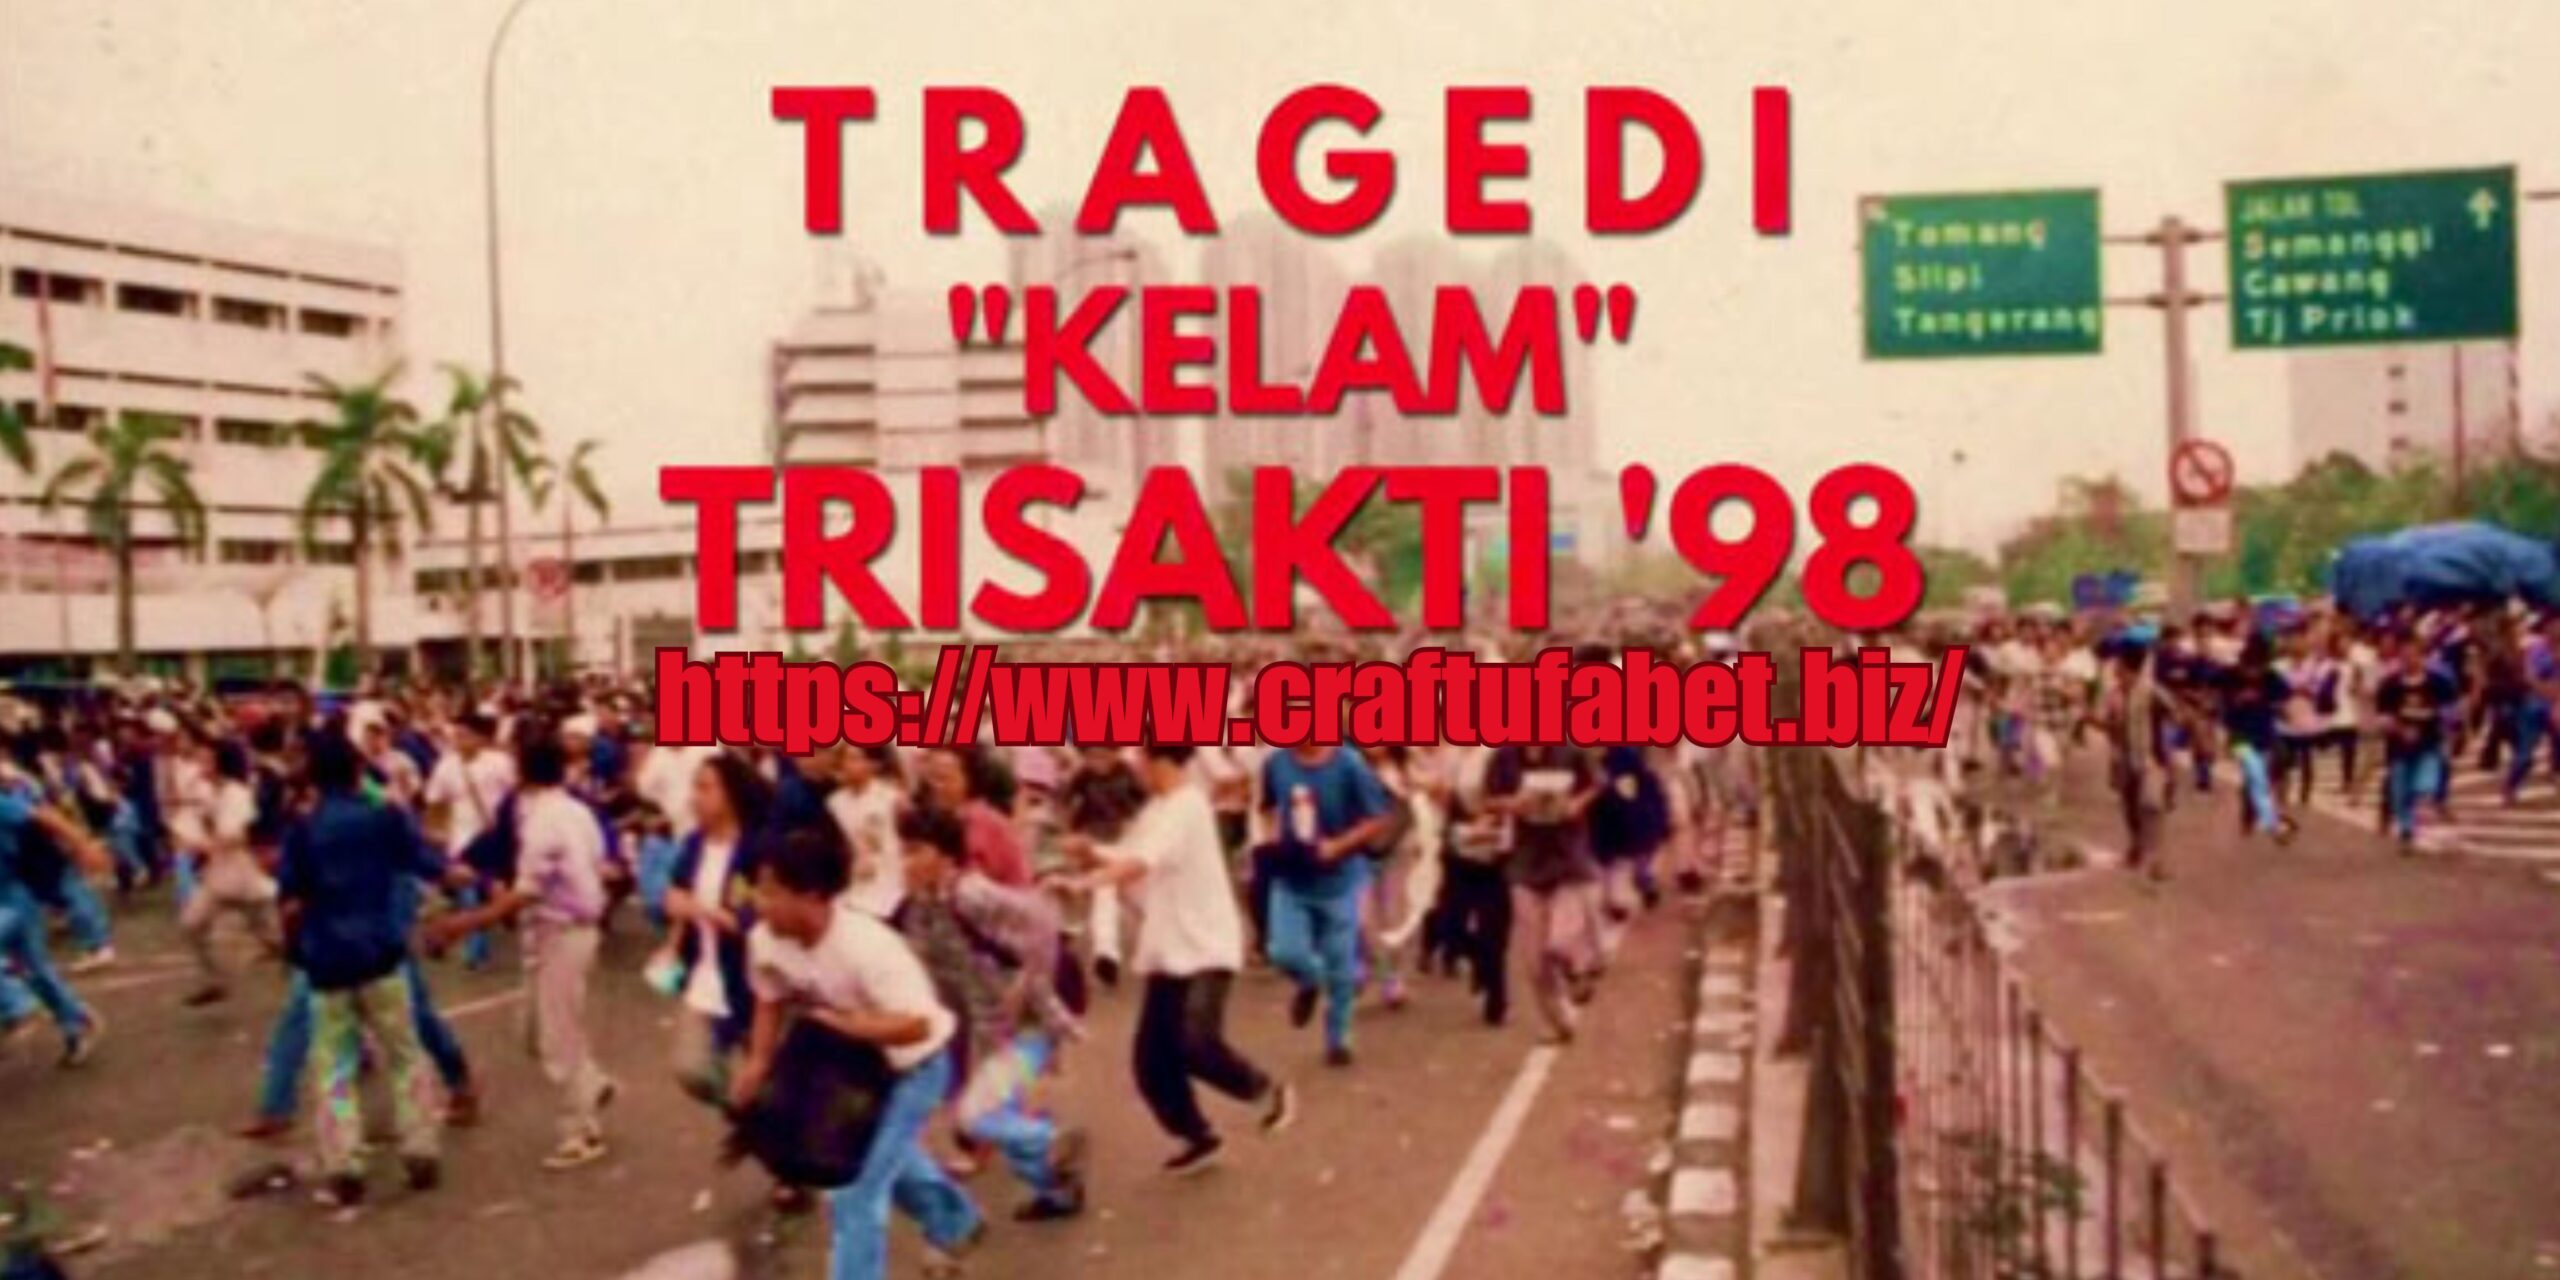 Tragedi "Kelam" TRISAKTI '98